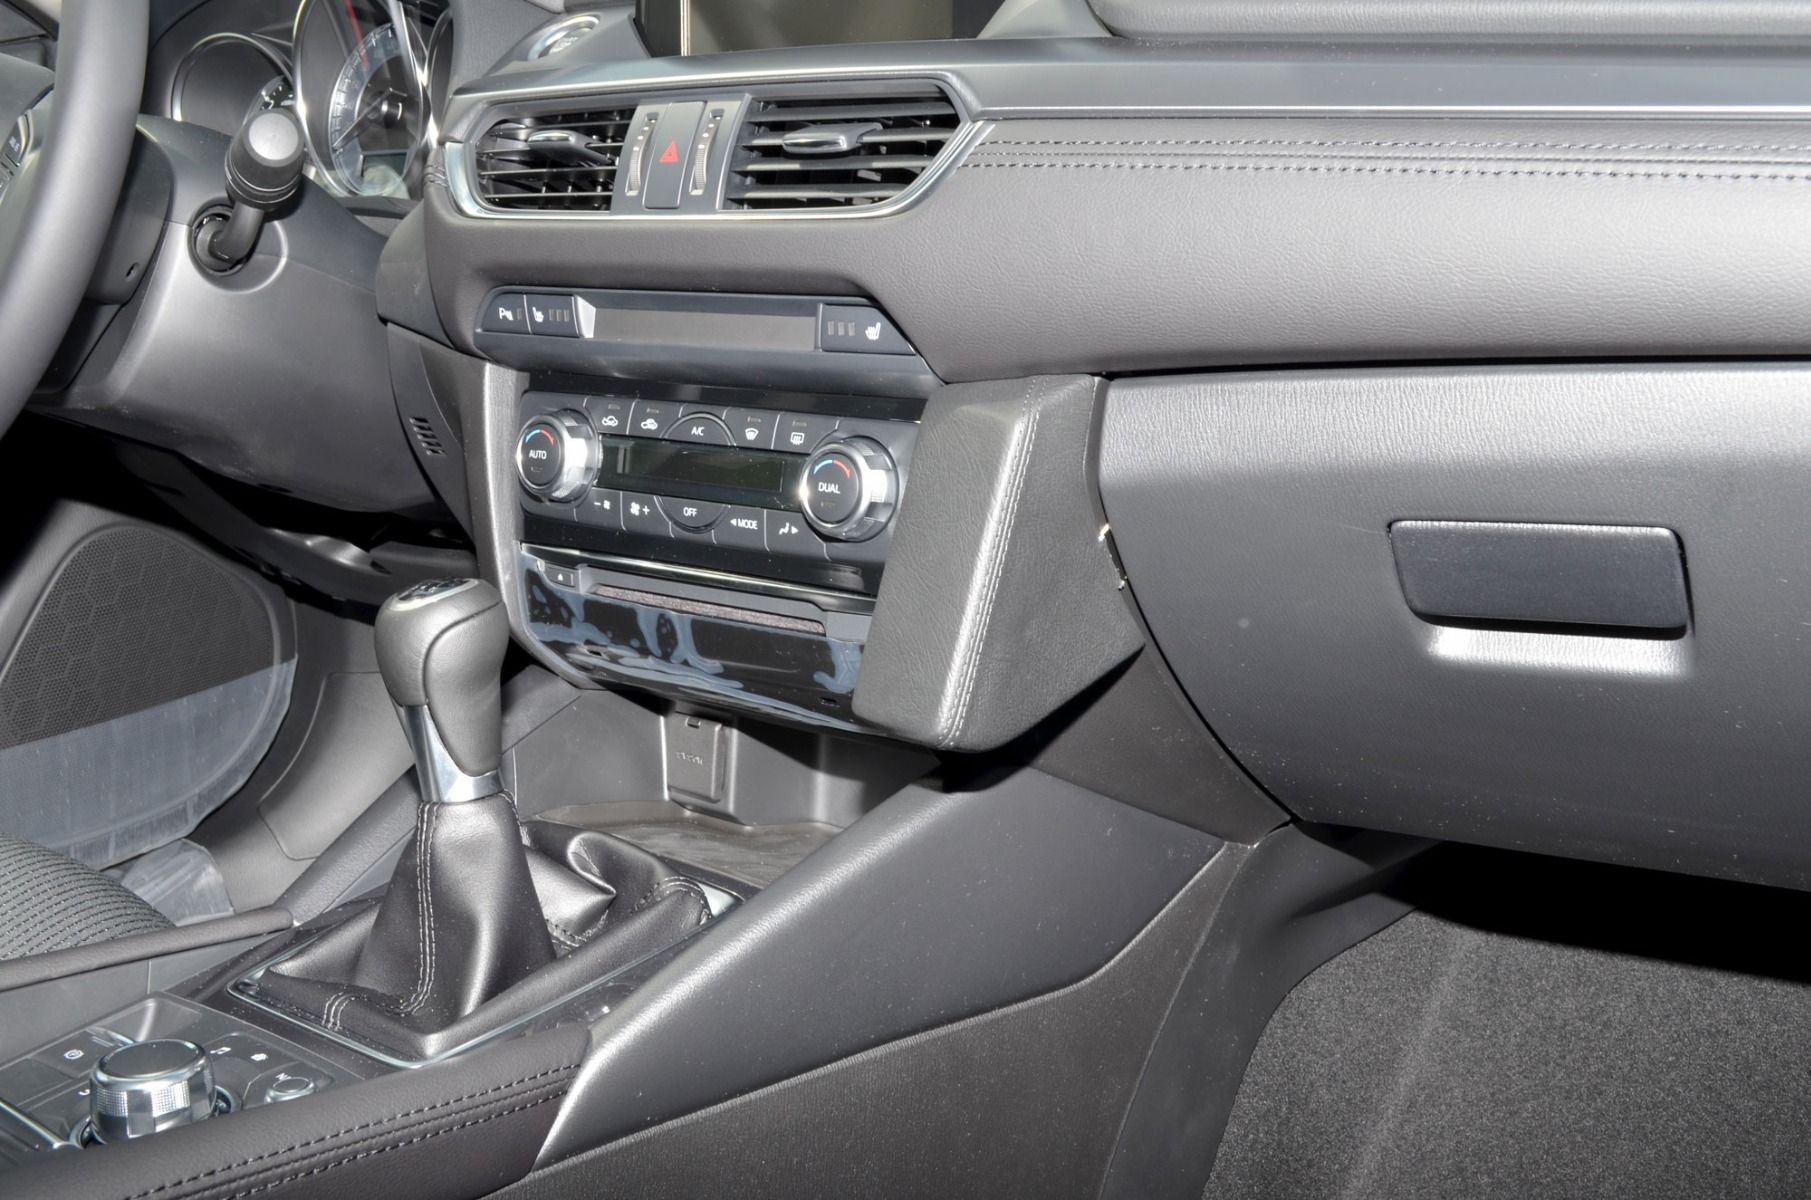 Kuda console Mazda 6 2015- Zwart